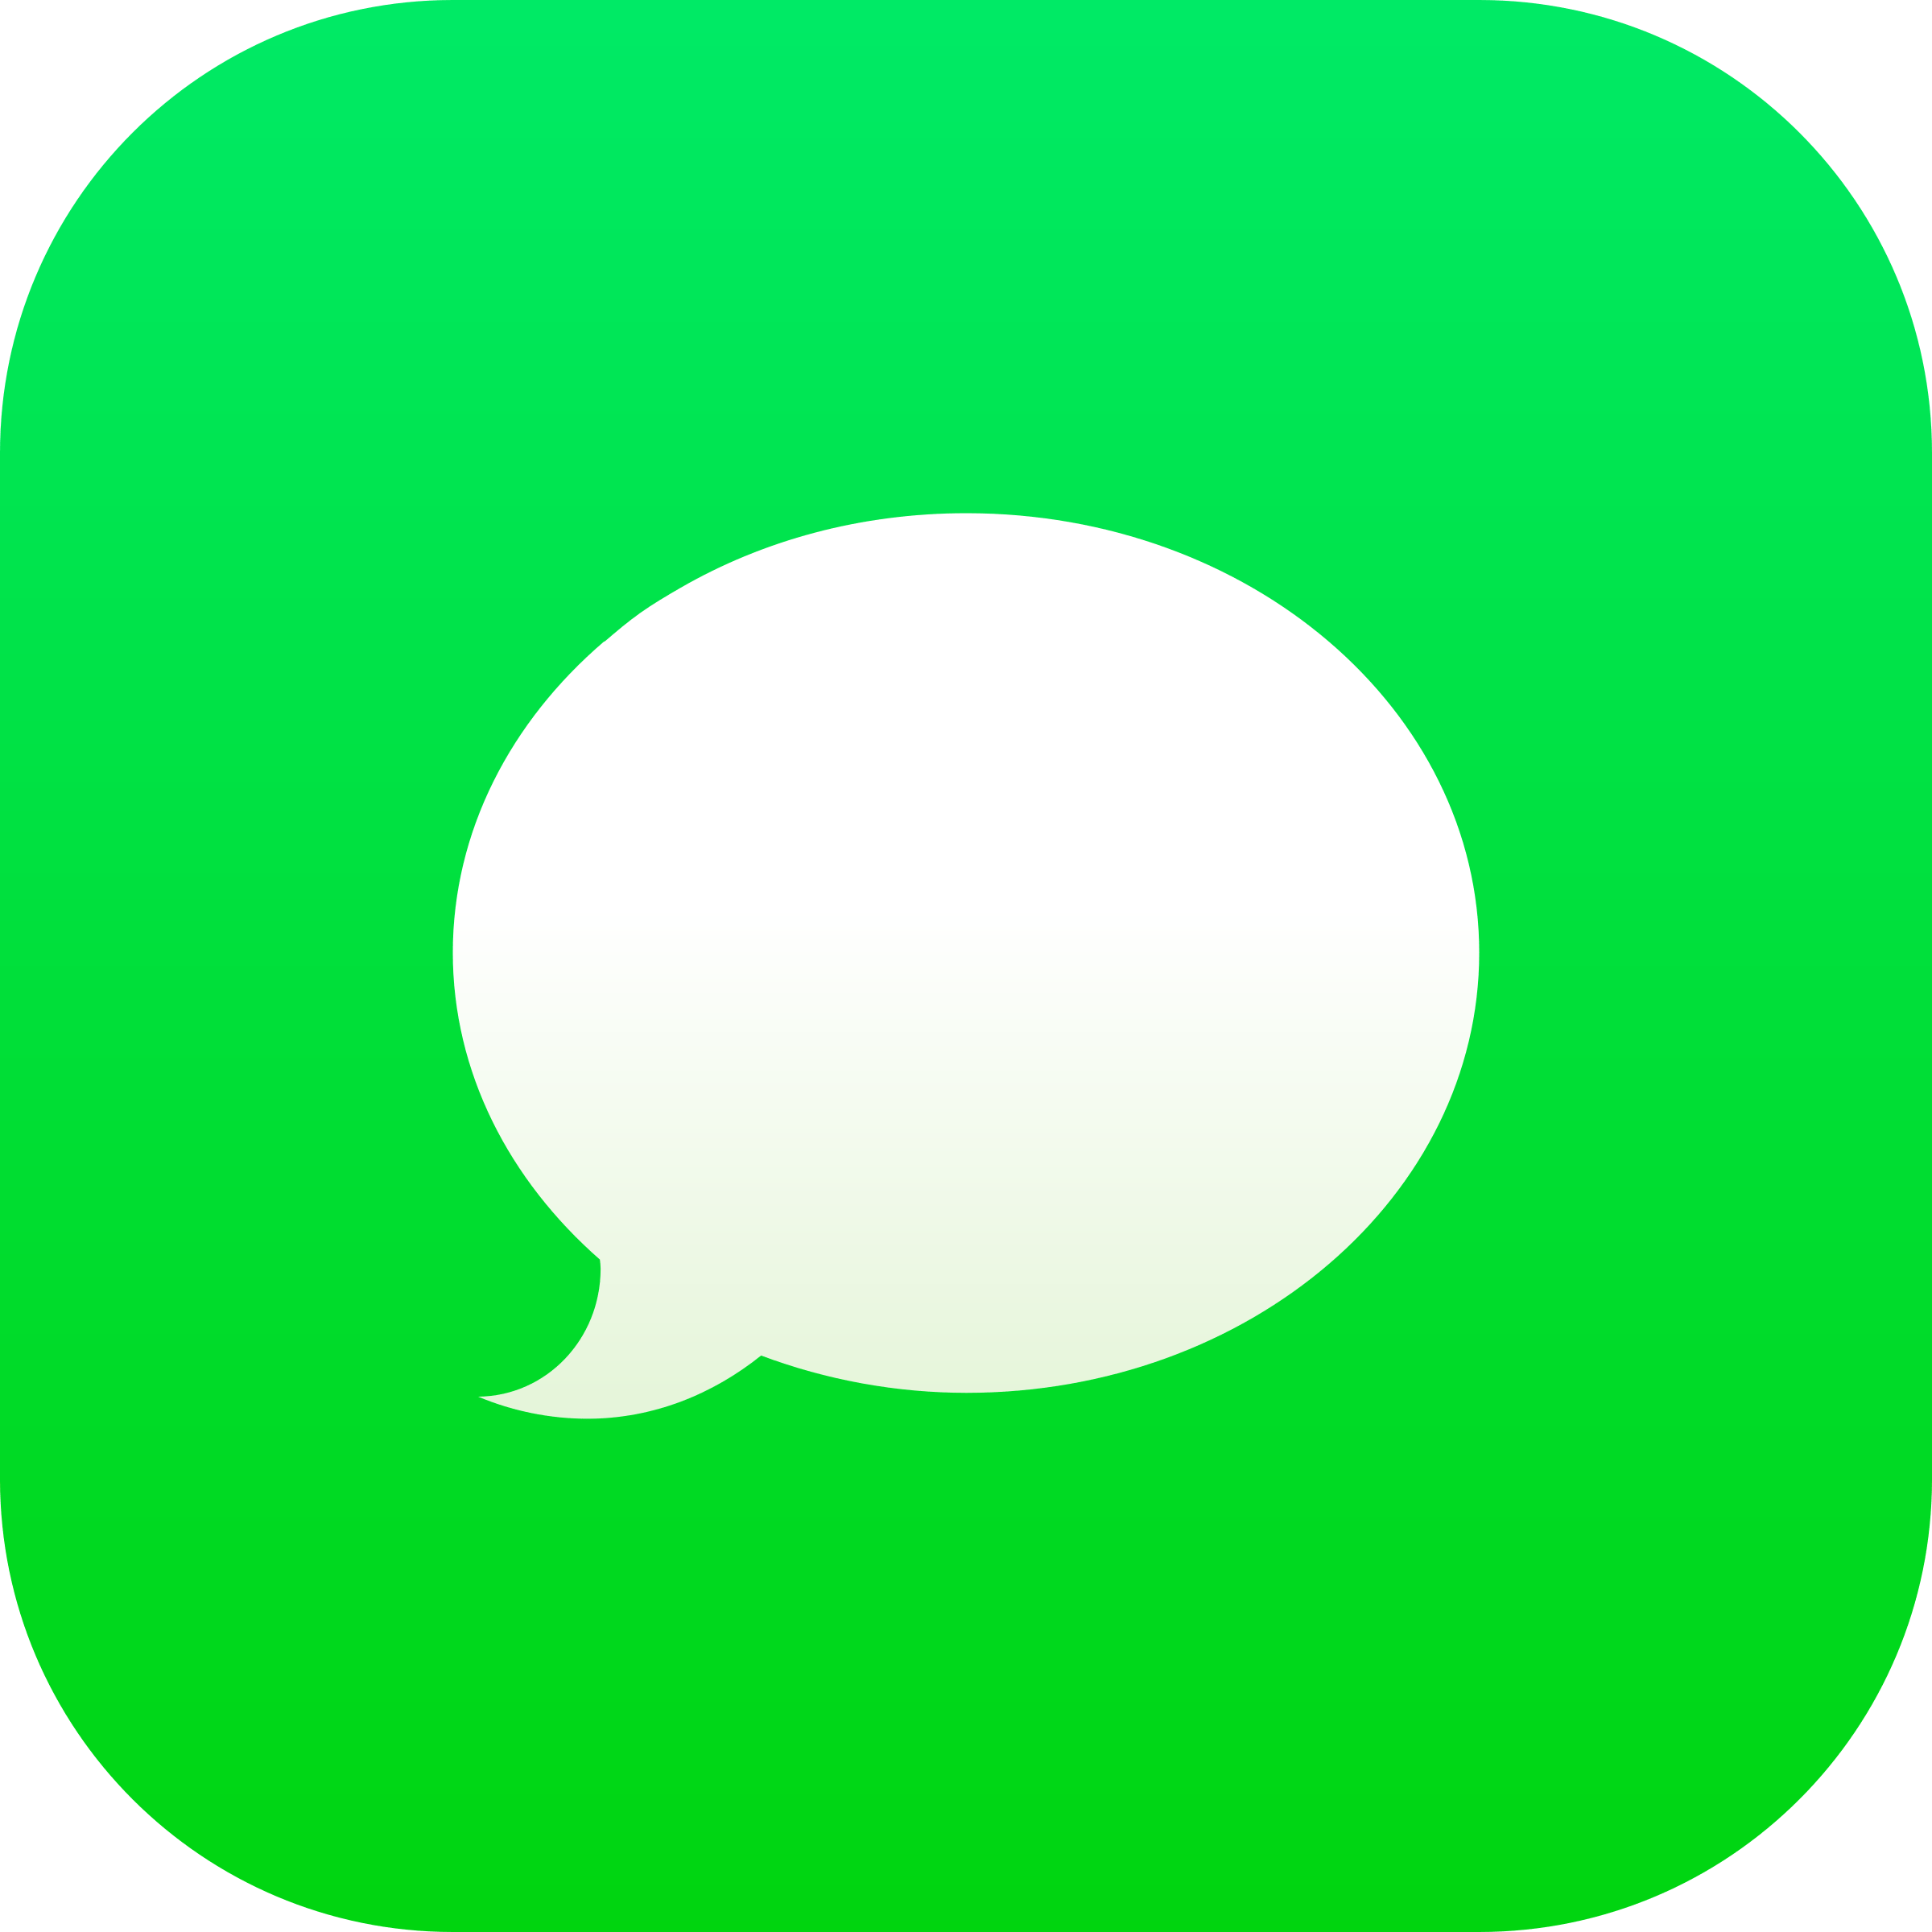 Green Messaging Logo - Messages iOS Logo PNG Transparent & SVG Vector